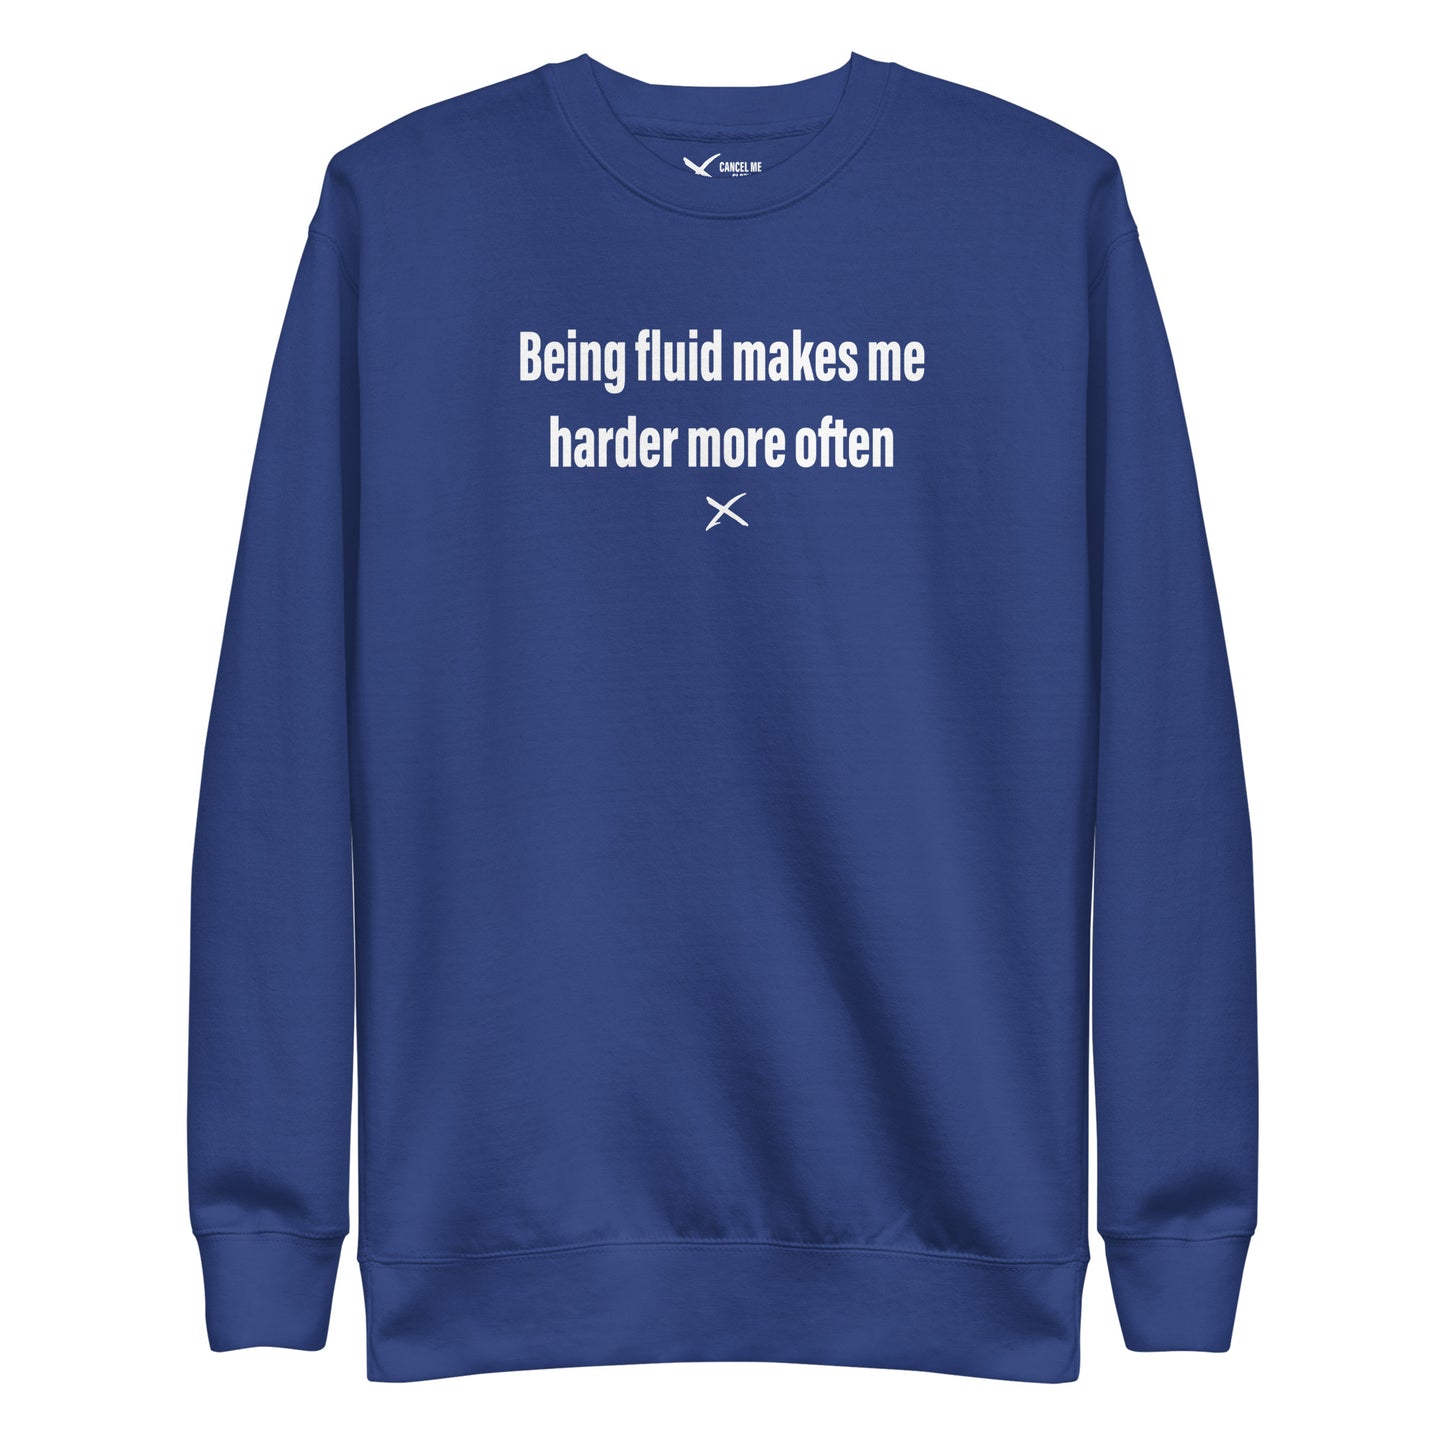 Being fluid makes me harder more often - Sweatshirt